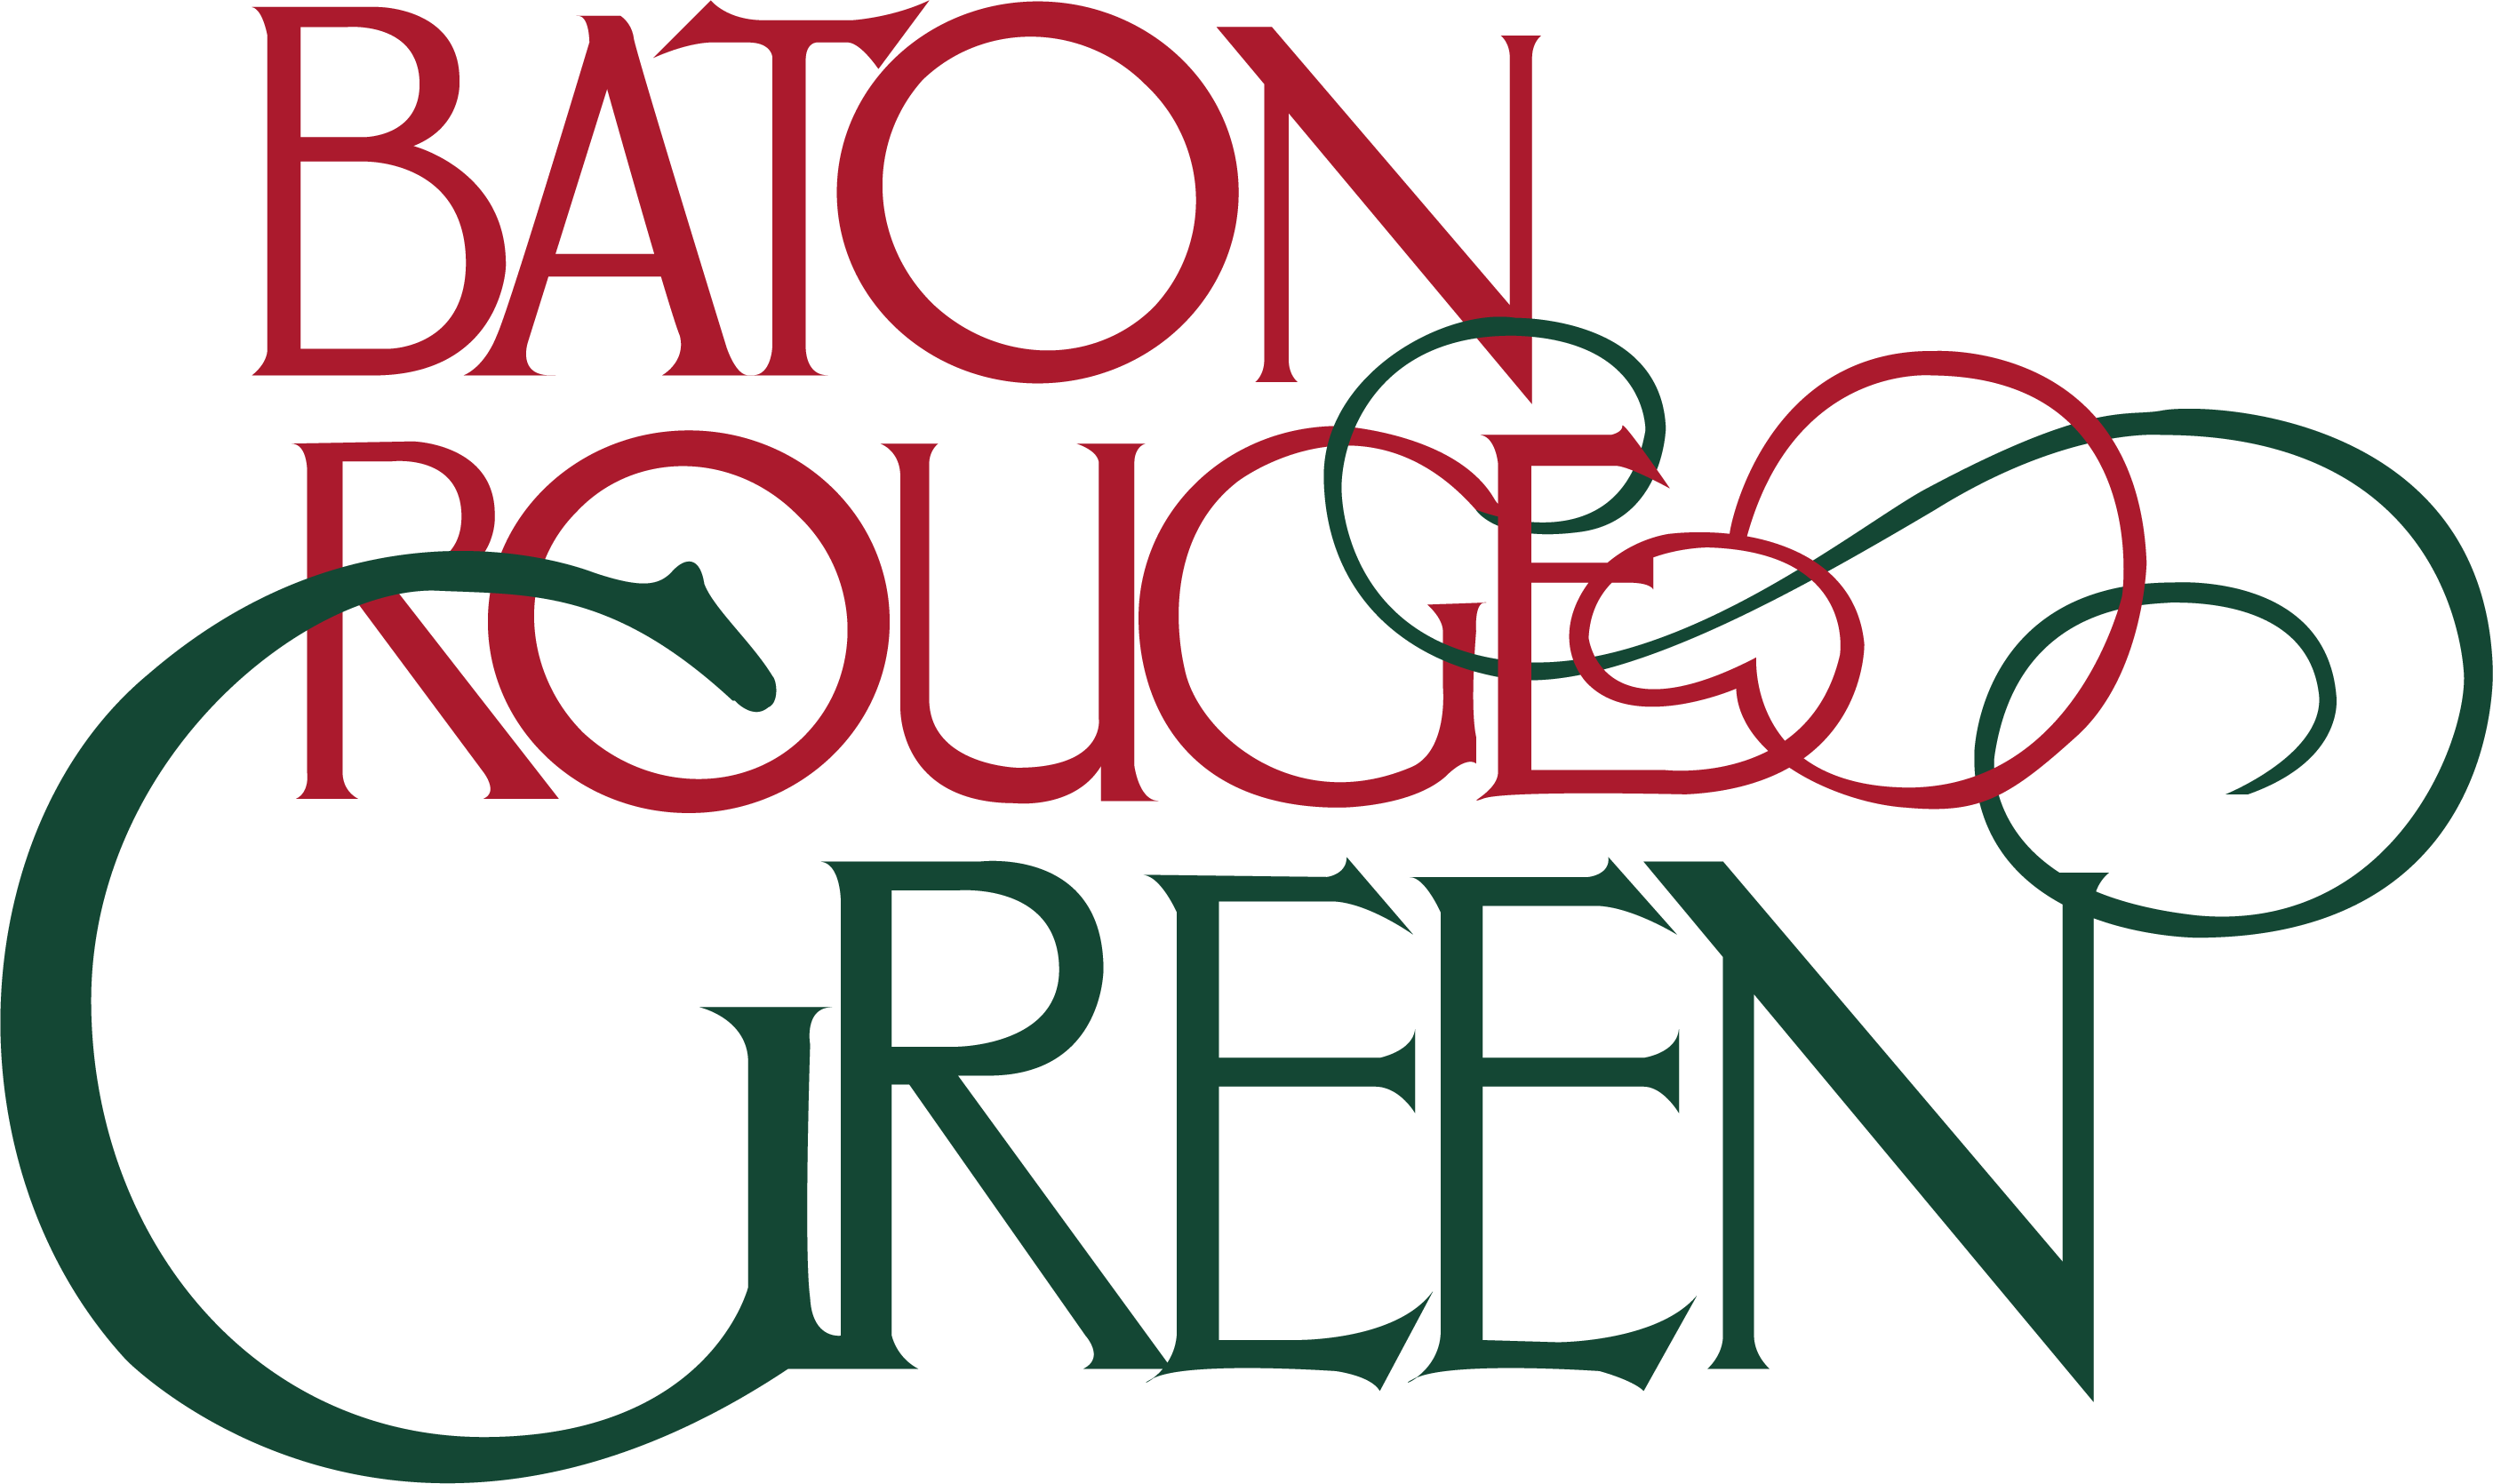 Baton Rouge Green logo